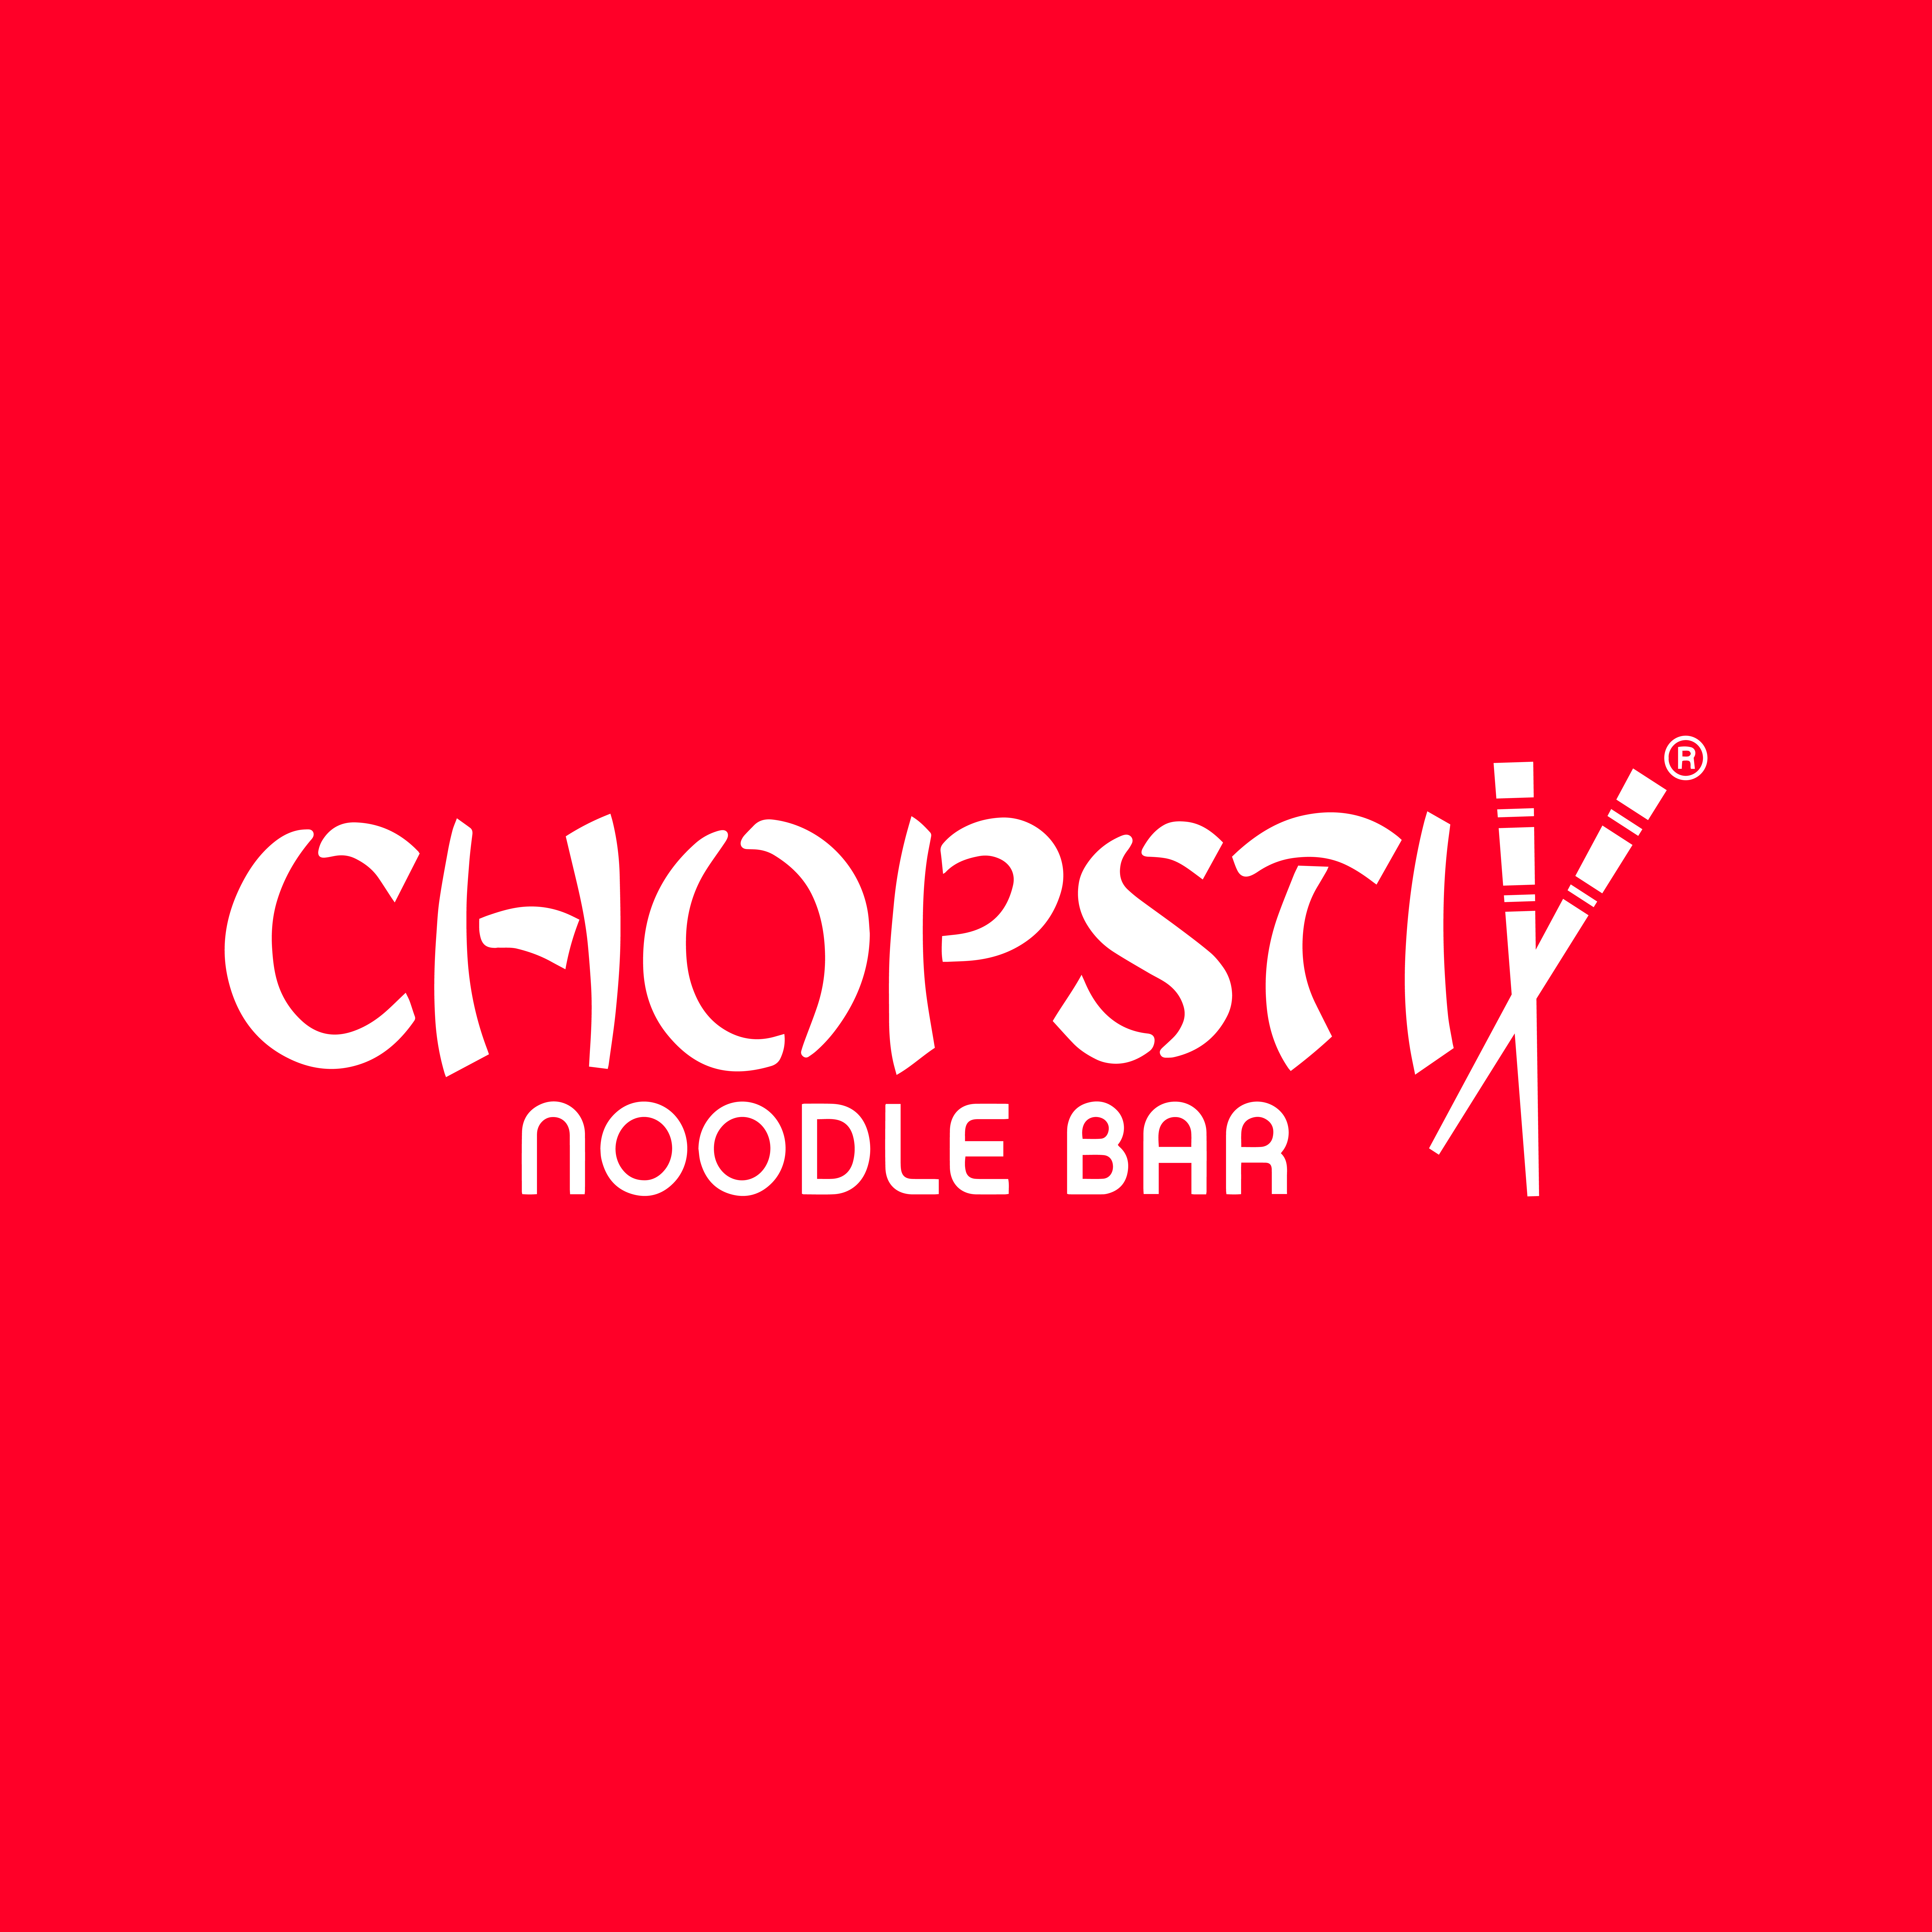 Updated Chopstix logo